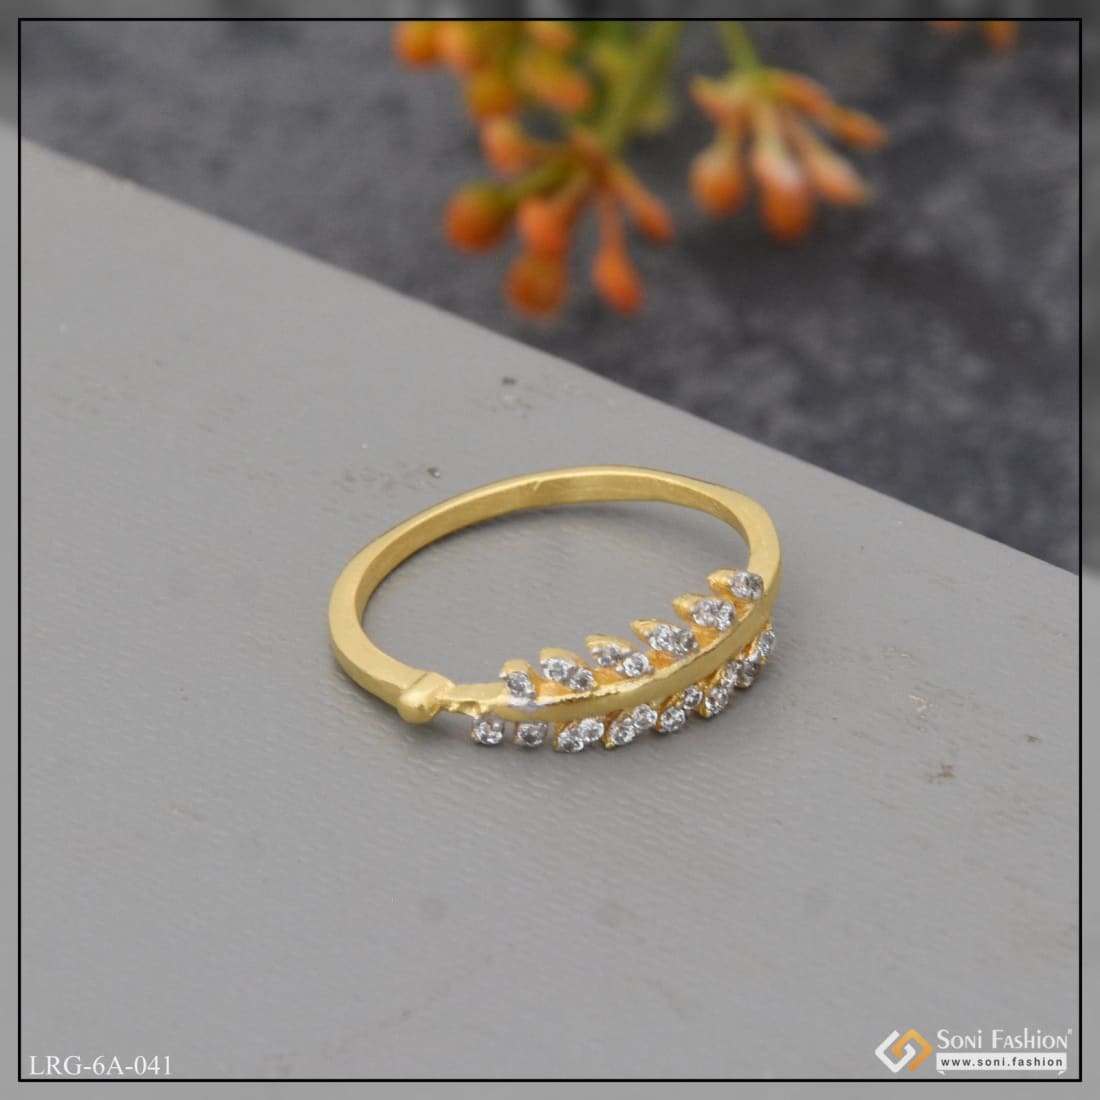 1 Gram Gold Plated Handmade Lion Finely Detailed Design Ring for Men -  Style B383 #1gram #traditionaljewellery #southindianjewe… | Rings for men, Ring  designs, Gold